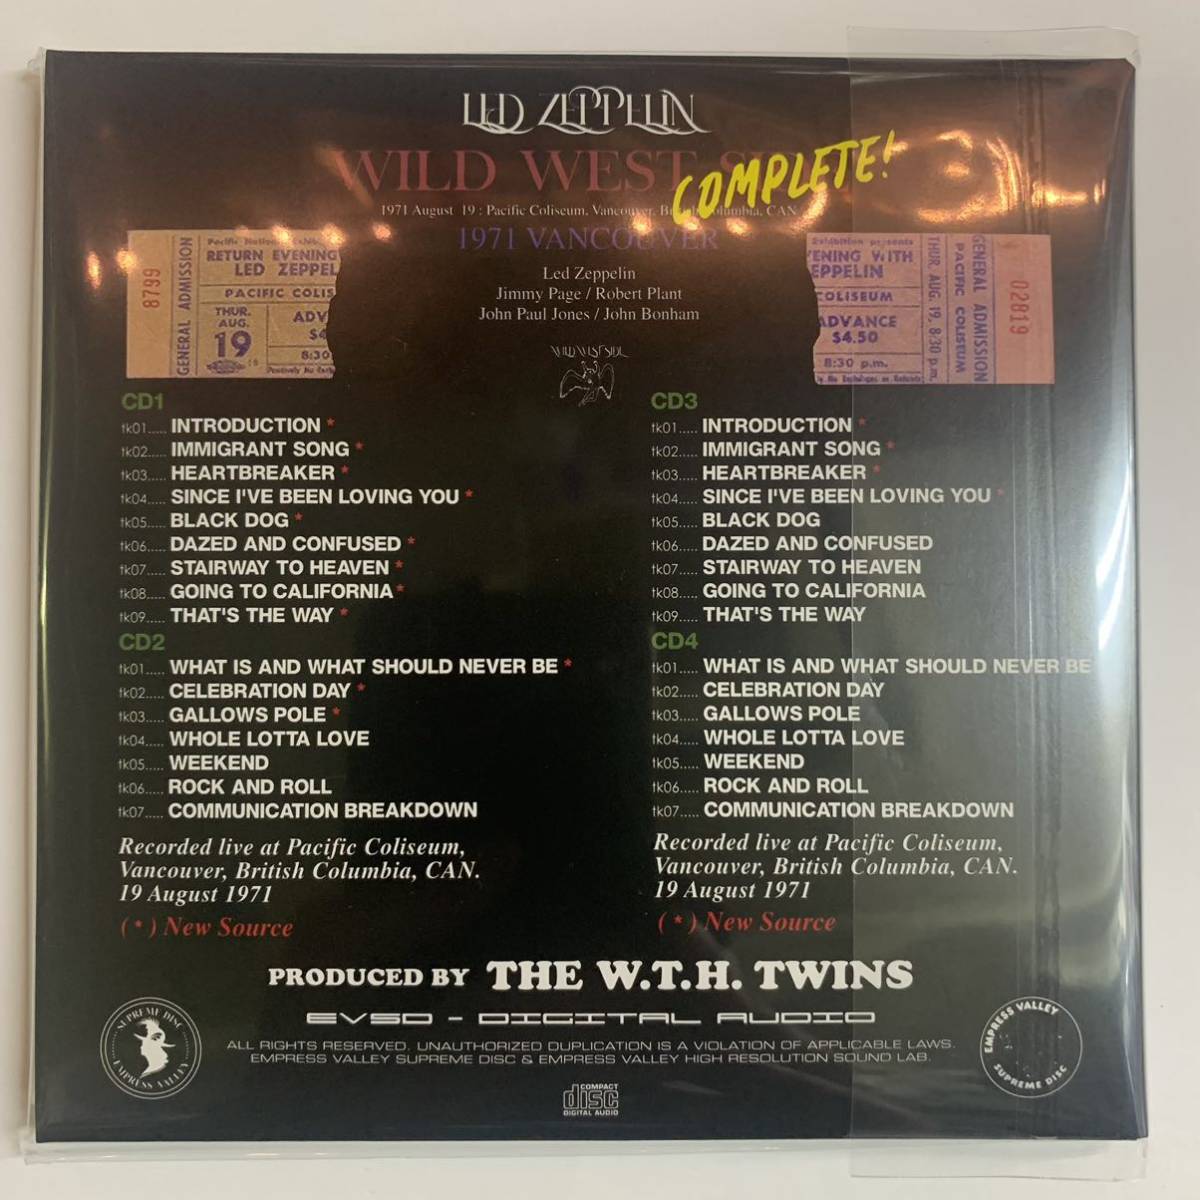 LED ZEPPELIN / WILD WEST SIDE “Complete!”1971 Vancouver 4CD Limited Edition Empress Valley Supreme disk 世界初登場音源！完全！